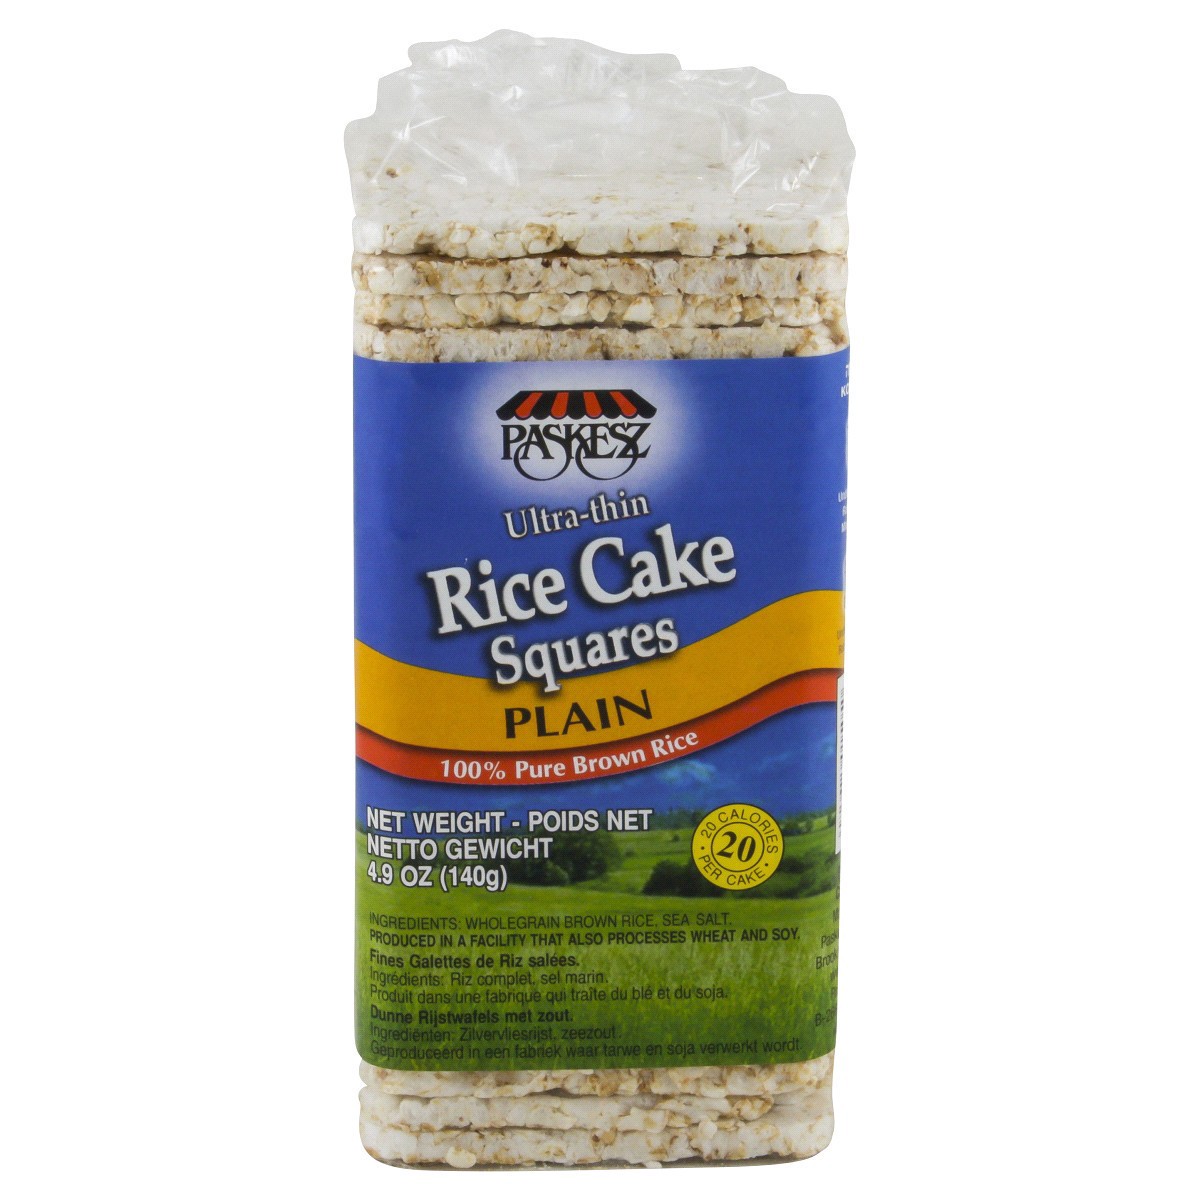 slide 1 of 13, Paskesz Ultra Thin Plain Rice Cake Squares, 4.9 oz